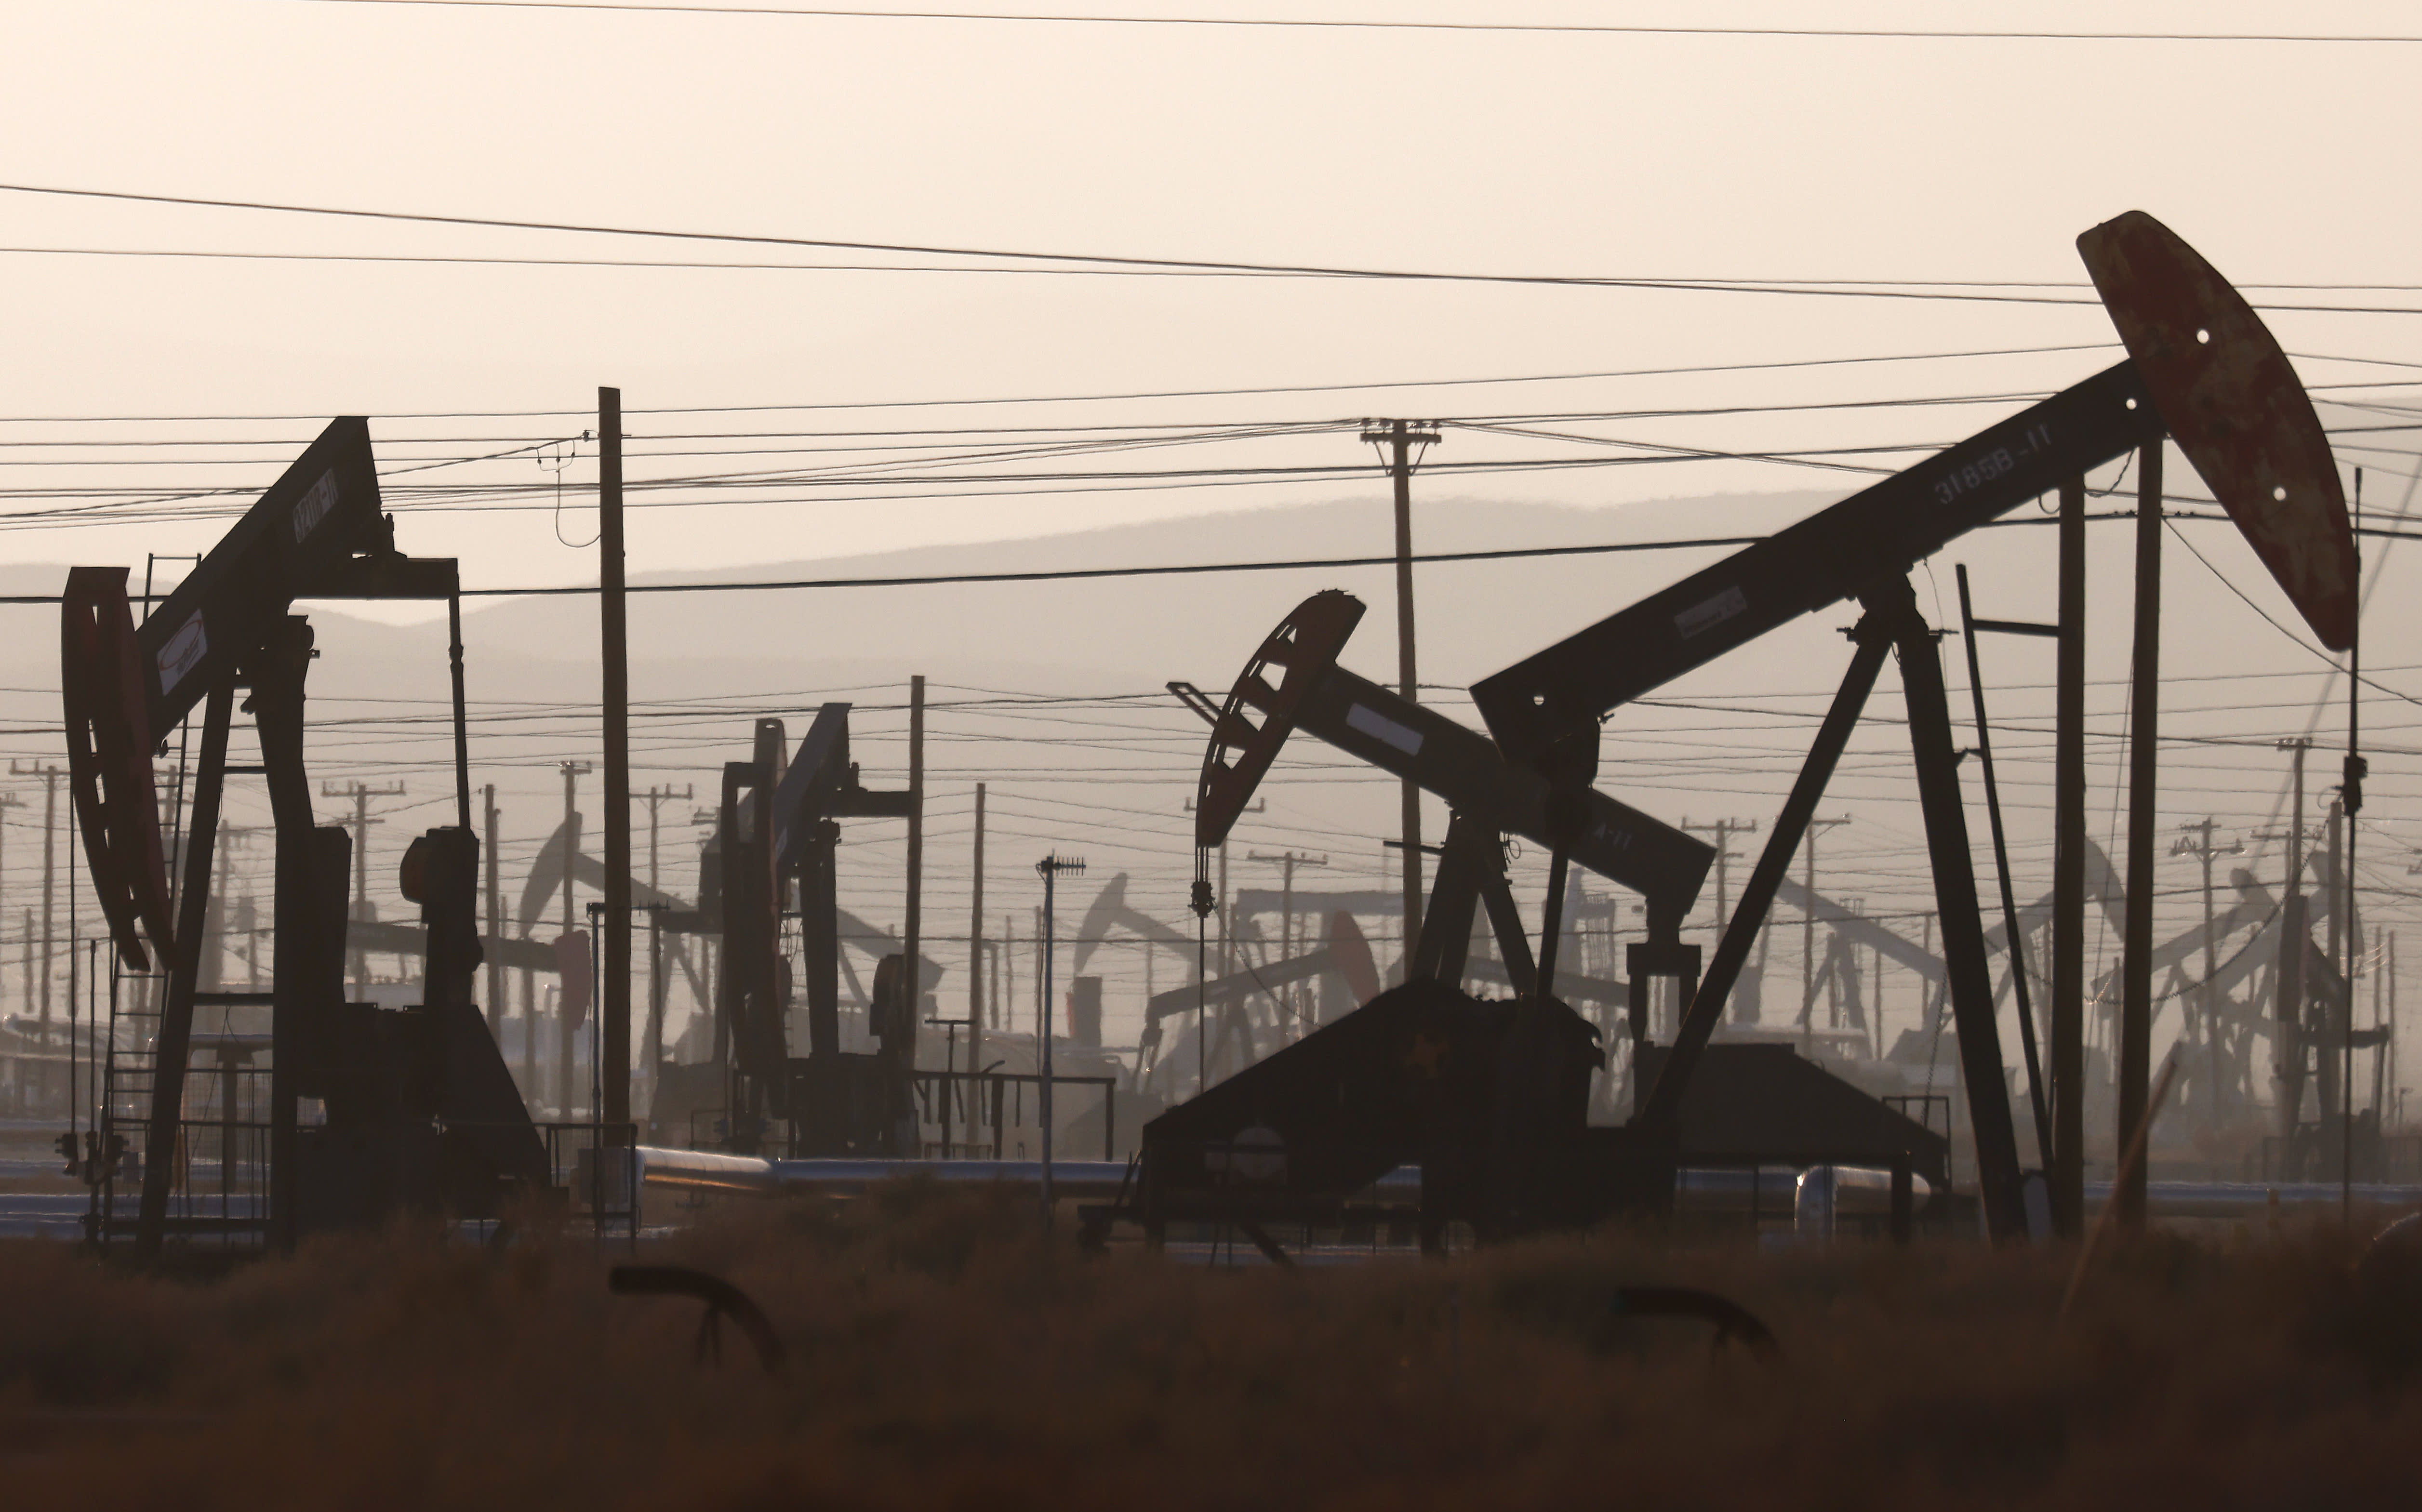 Oil could vault as high as $ 150 a barrel, veteran analyst warns